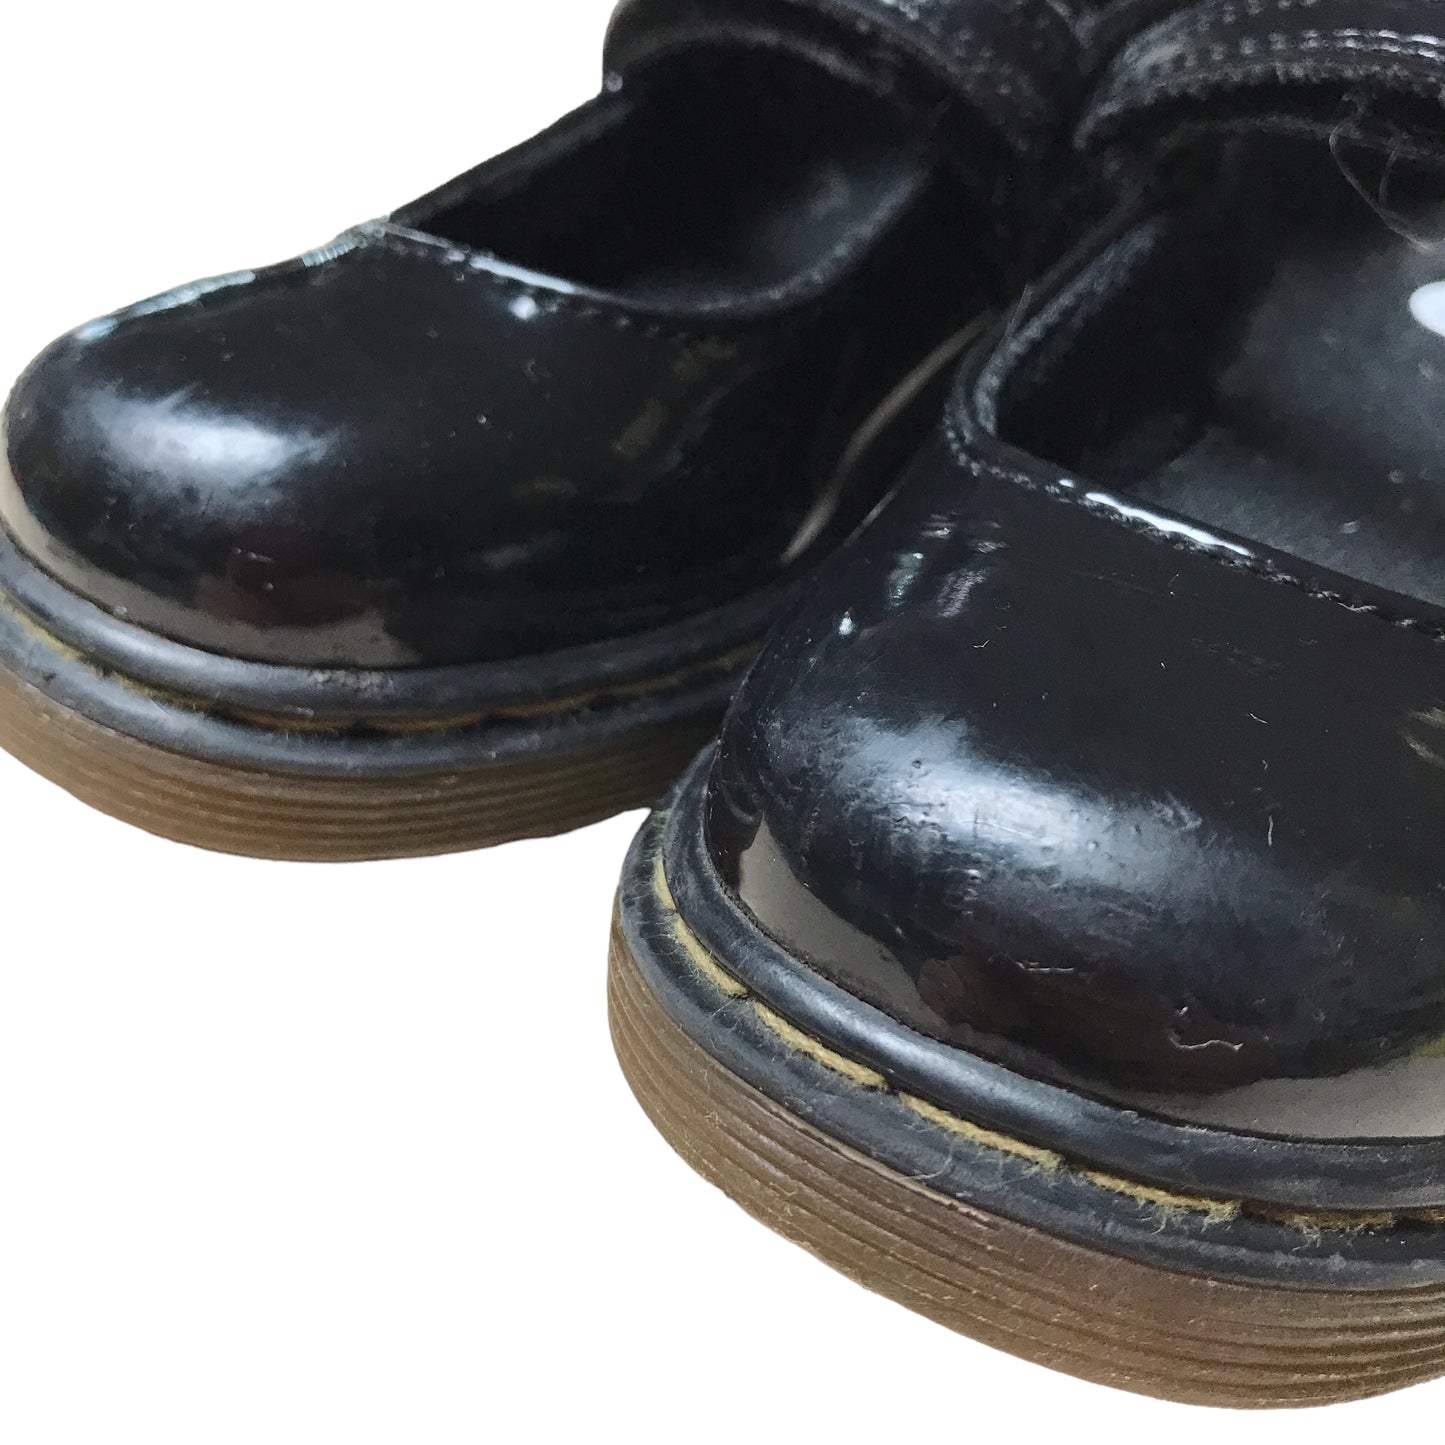 Dr. Martens Black Leather Mary Jane Shoes Shoe Size 8.5 junior